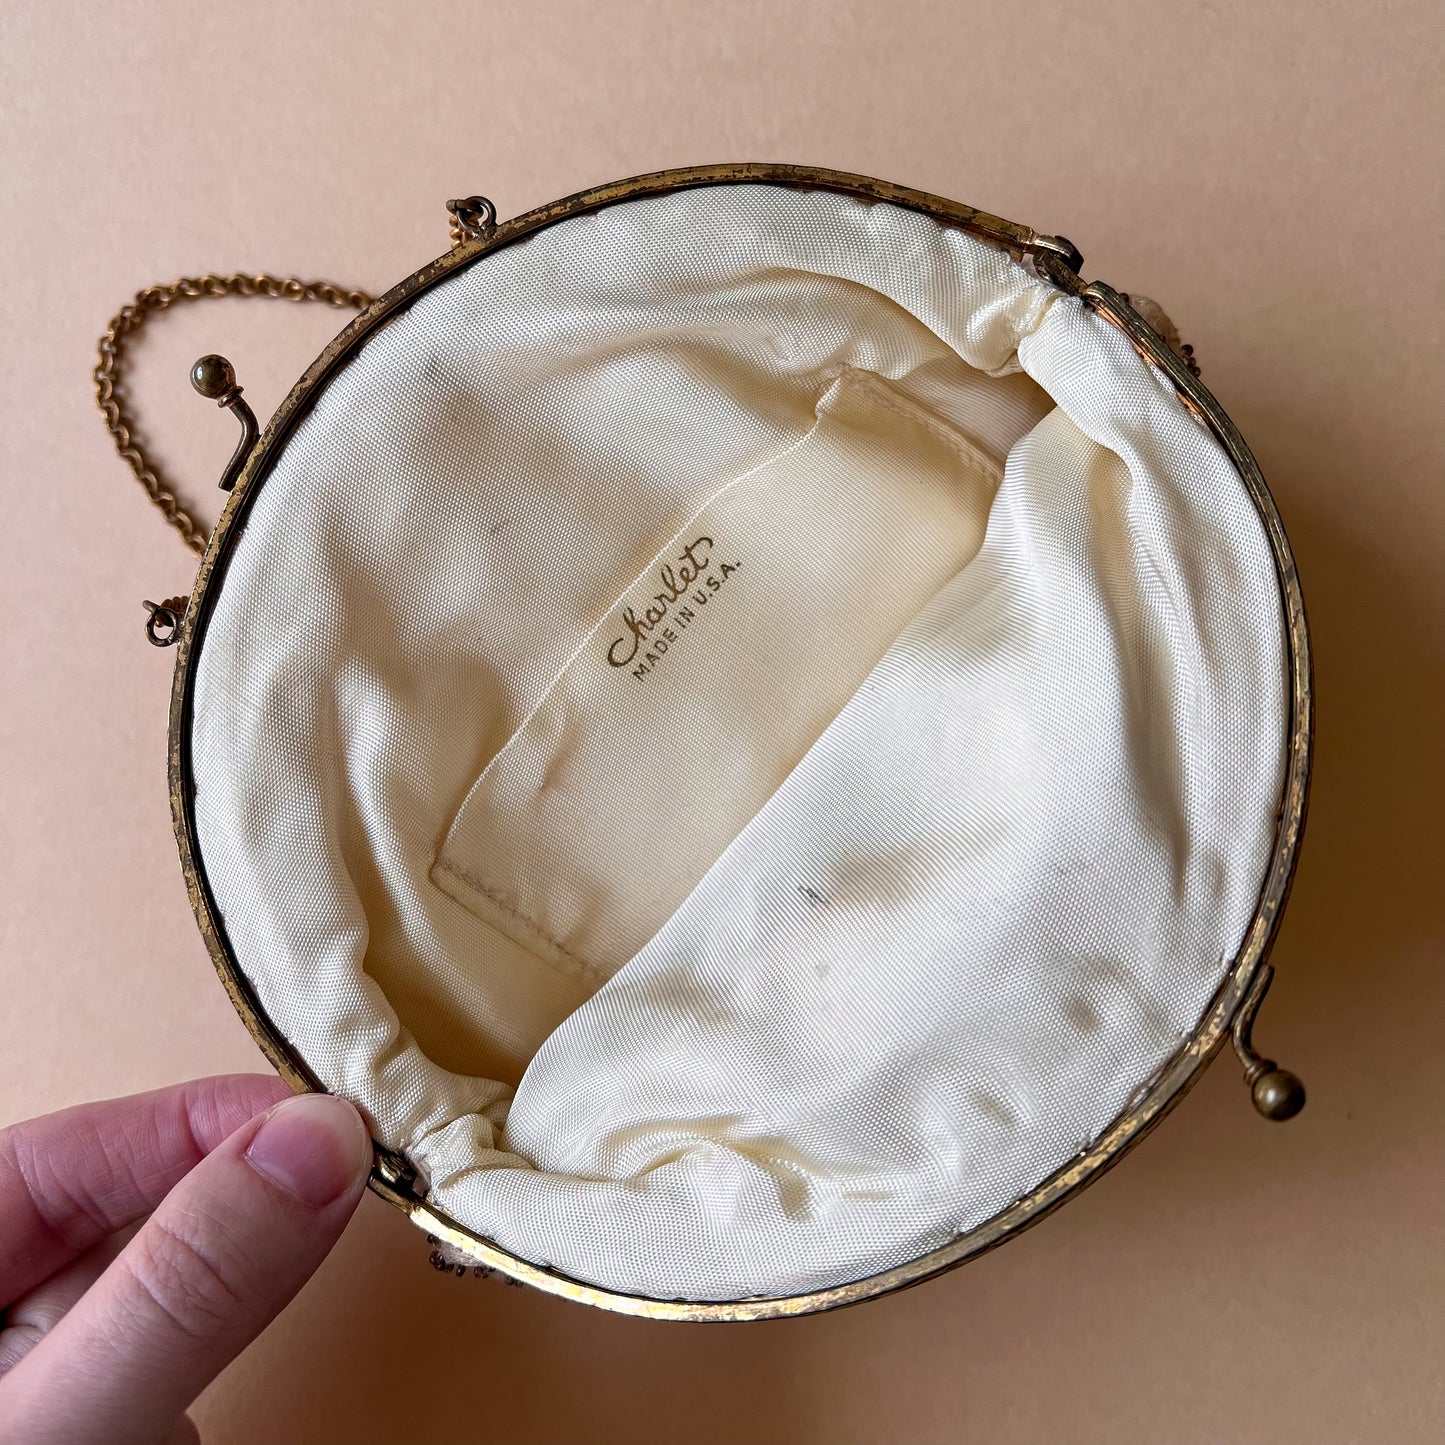 Stunning 1950s Weinstocks Vintage Beaded Handbag